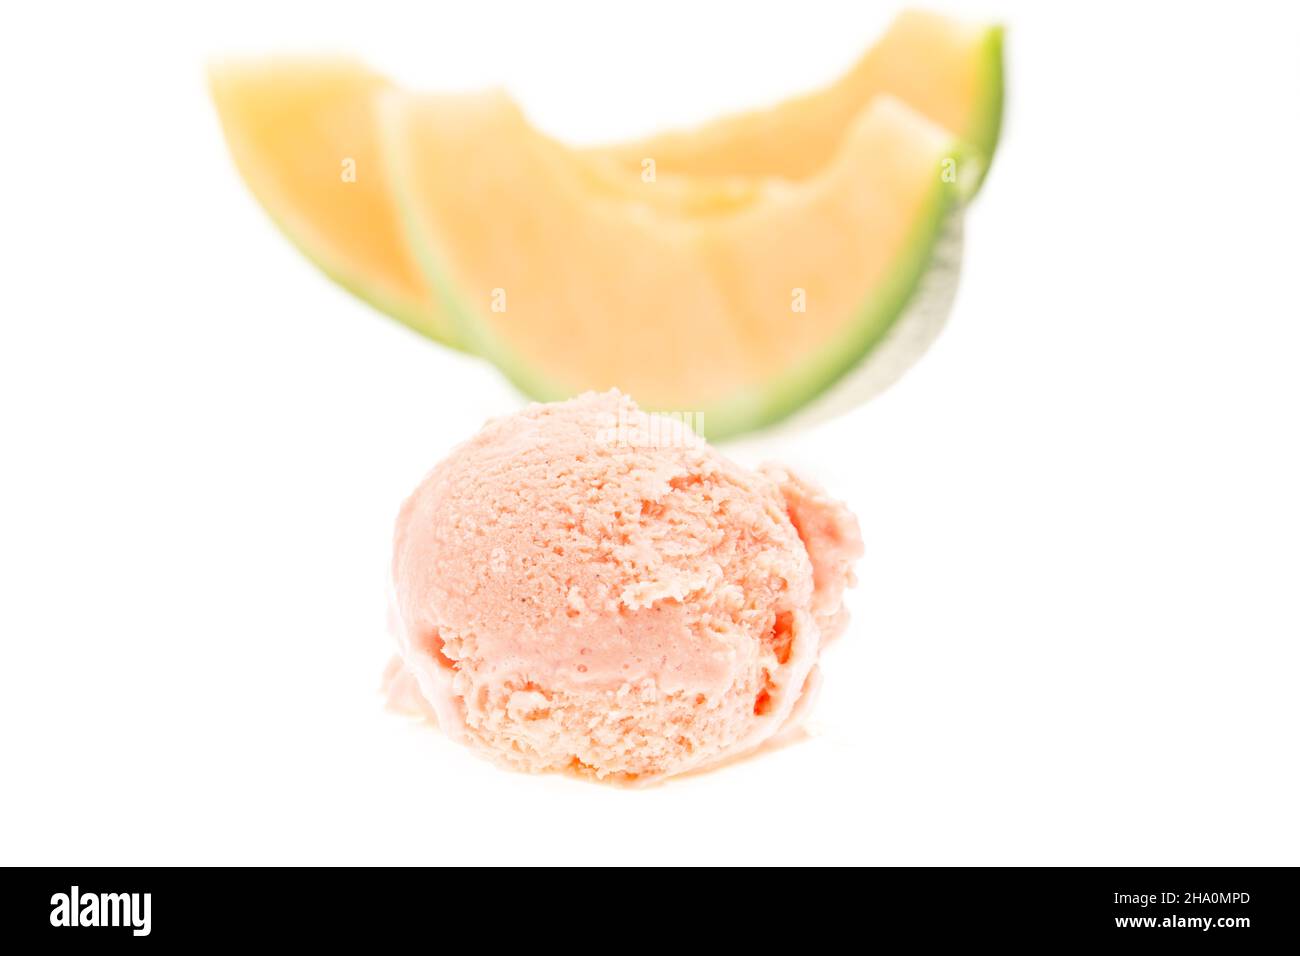 Ball, ice ball, ice cream, melon, melon ice cream, Melon ice cream scoop, yellow, pink, red, melon, white, ice cream, fruit, food, fruit, details, ora Stock Photo